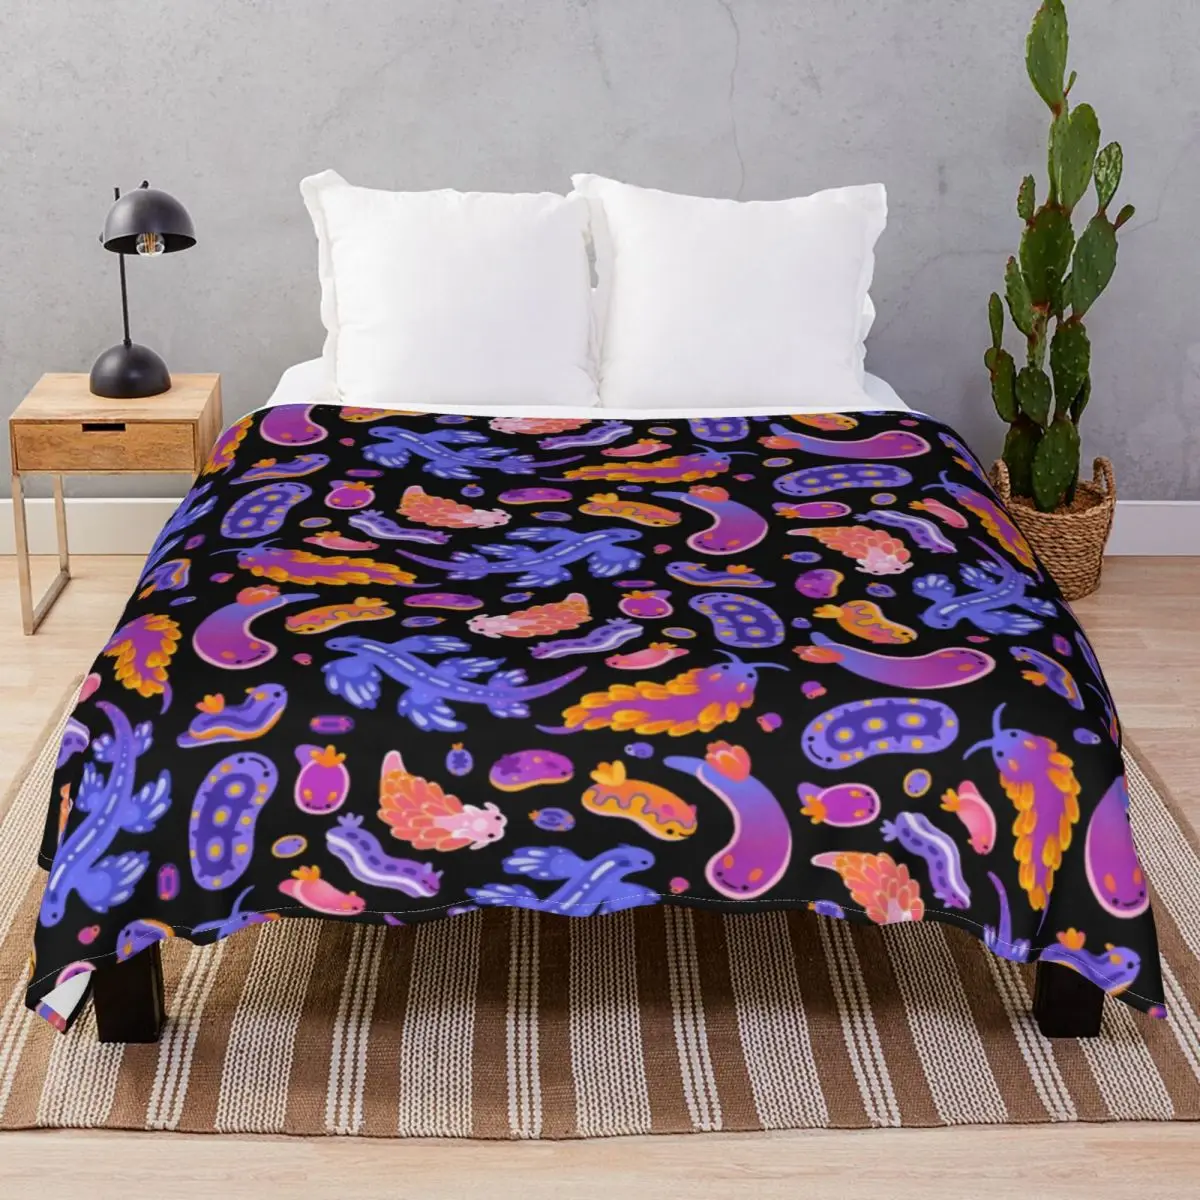 Sea Slug Blankets Flannel Autumn/Winter Lightweight Thin Throw Blanket for Bedding Home Couch Travel Office